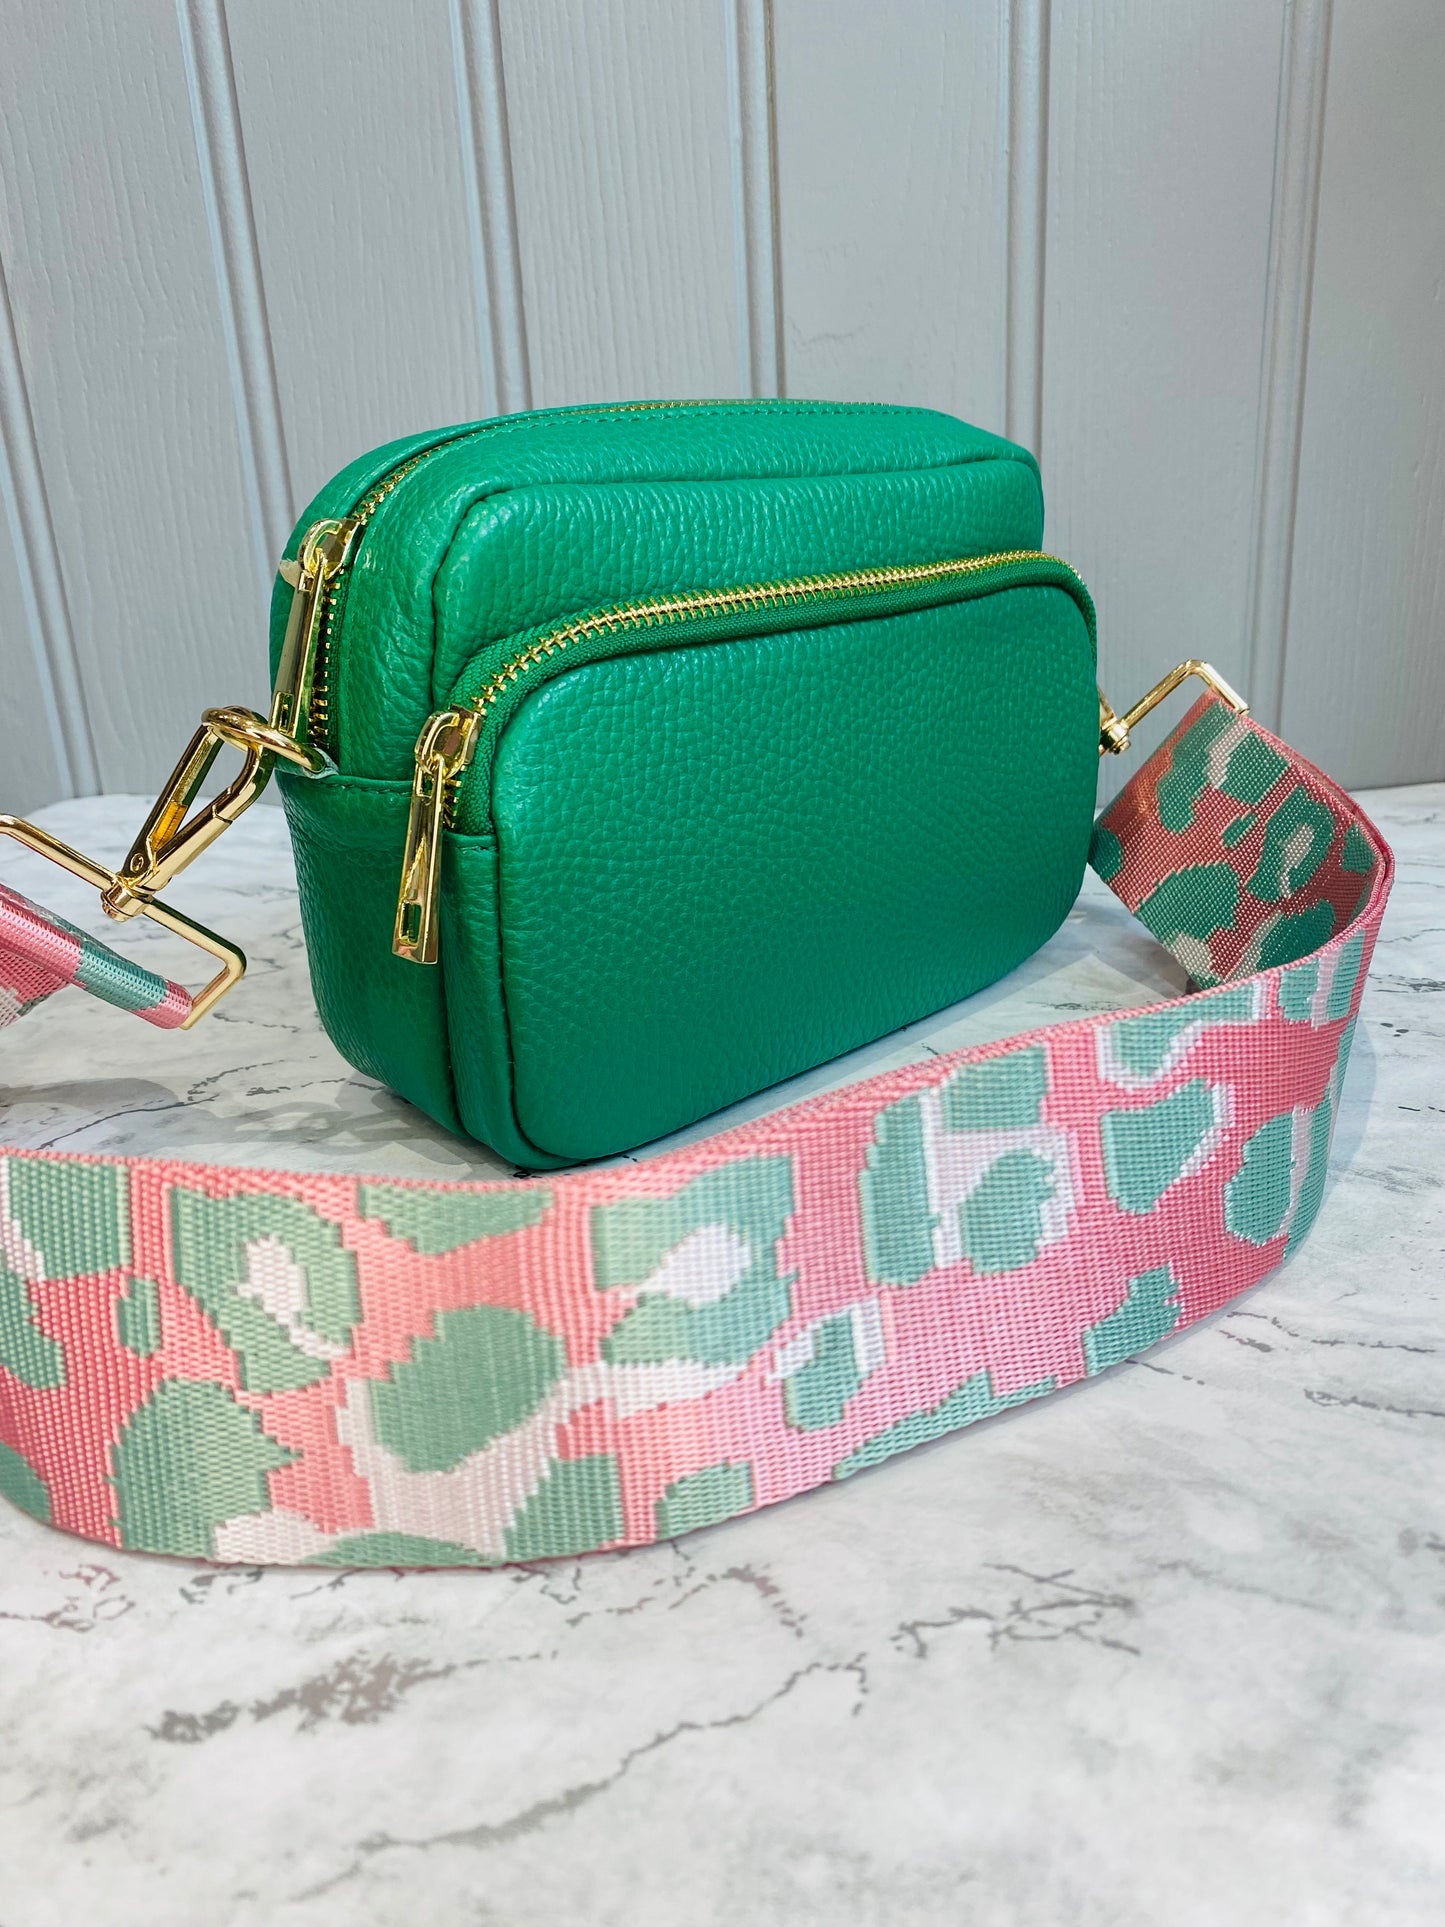 Leopard Print Bag Strap | Pink & Green